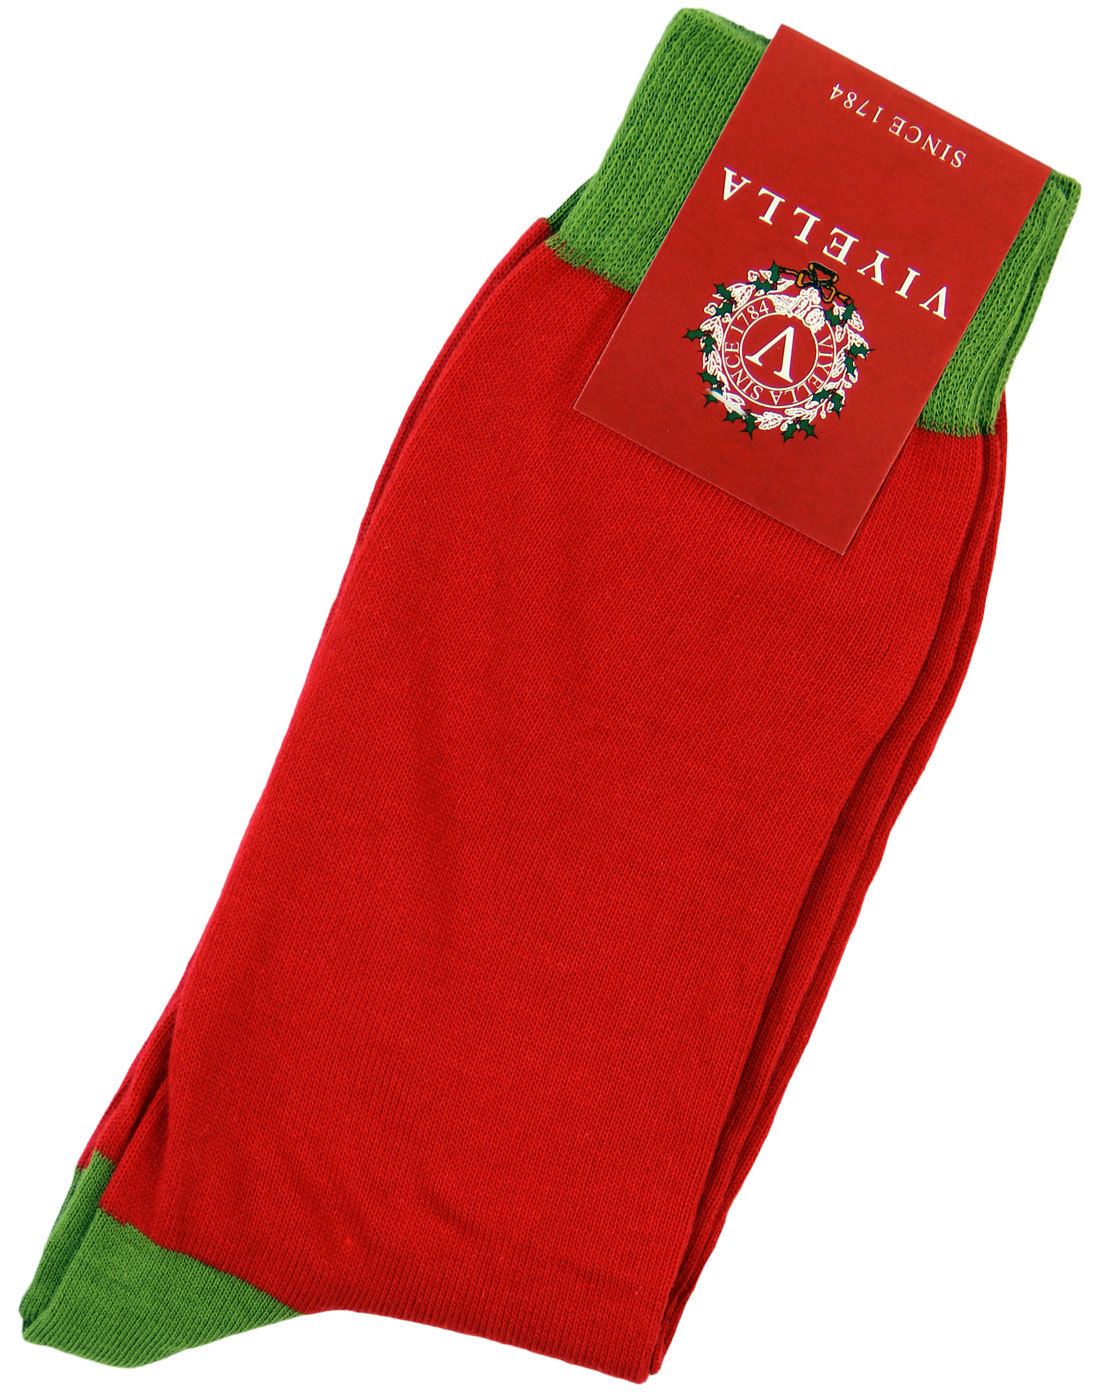 + VIYELLA Men's Classic Socks in Red/Green